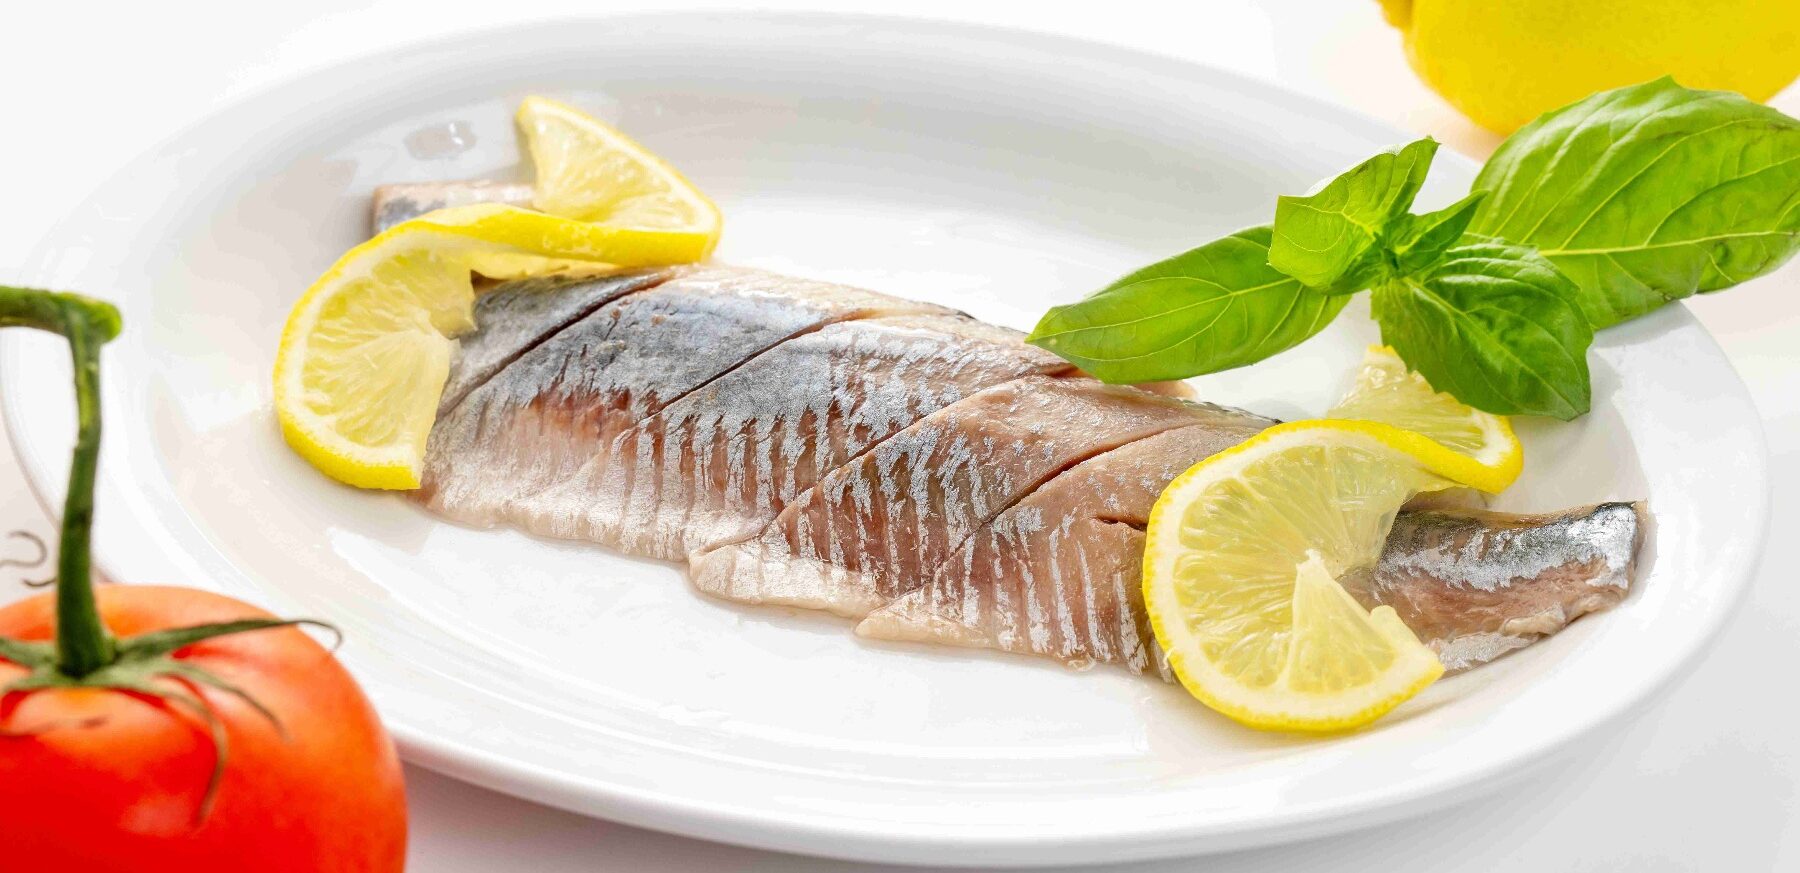 Fatty Fish - Foods High in Vitamin D